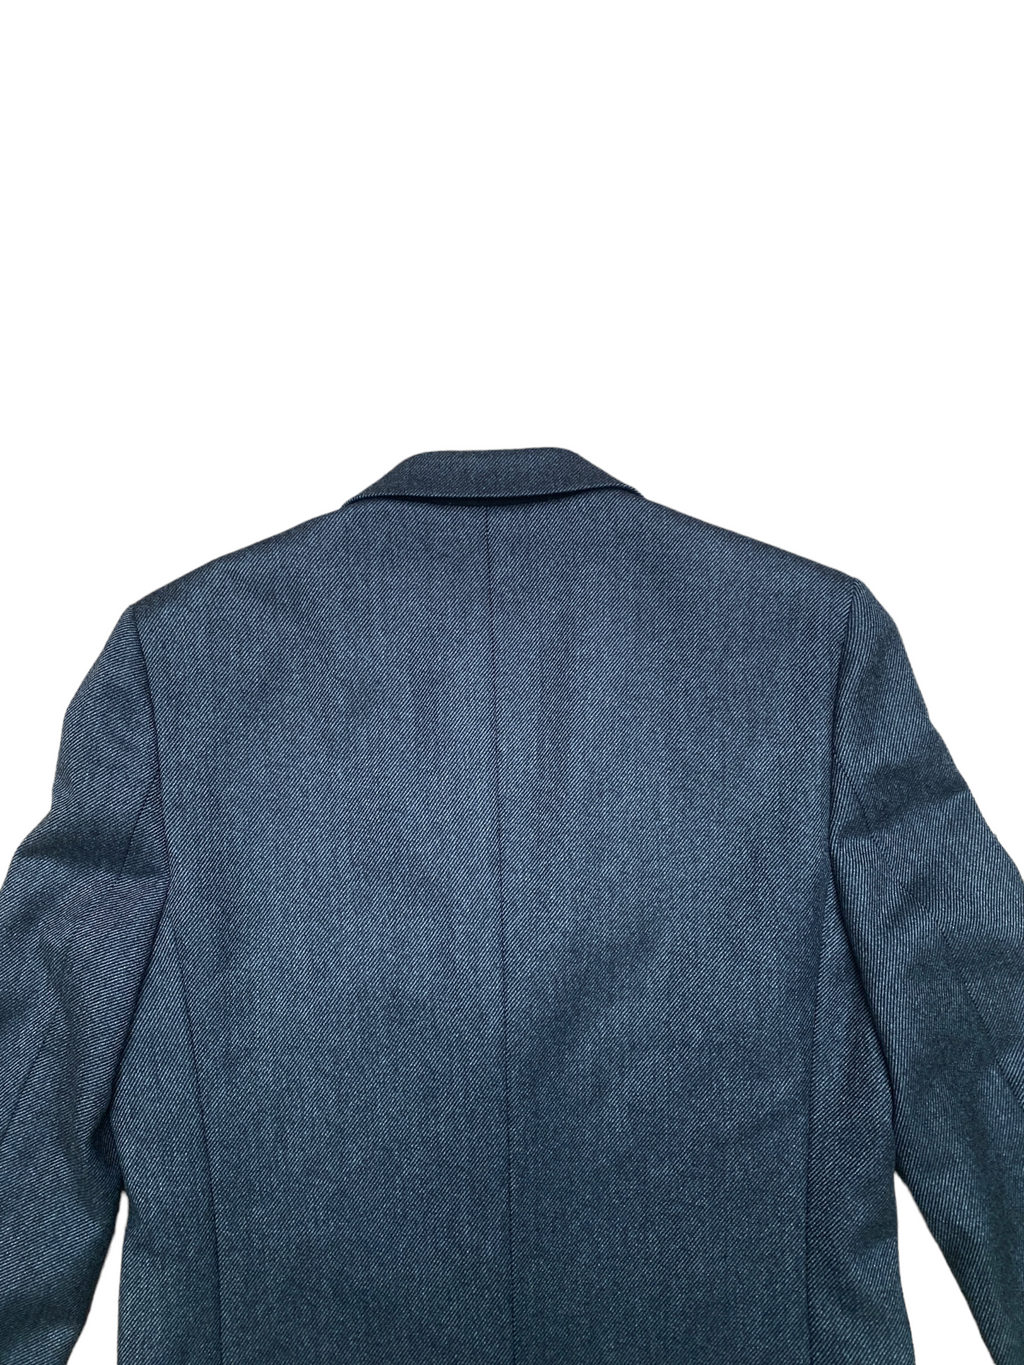 FW 2017 Grey Wool Chesterfield Coat